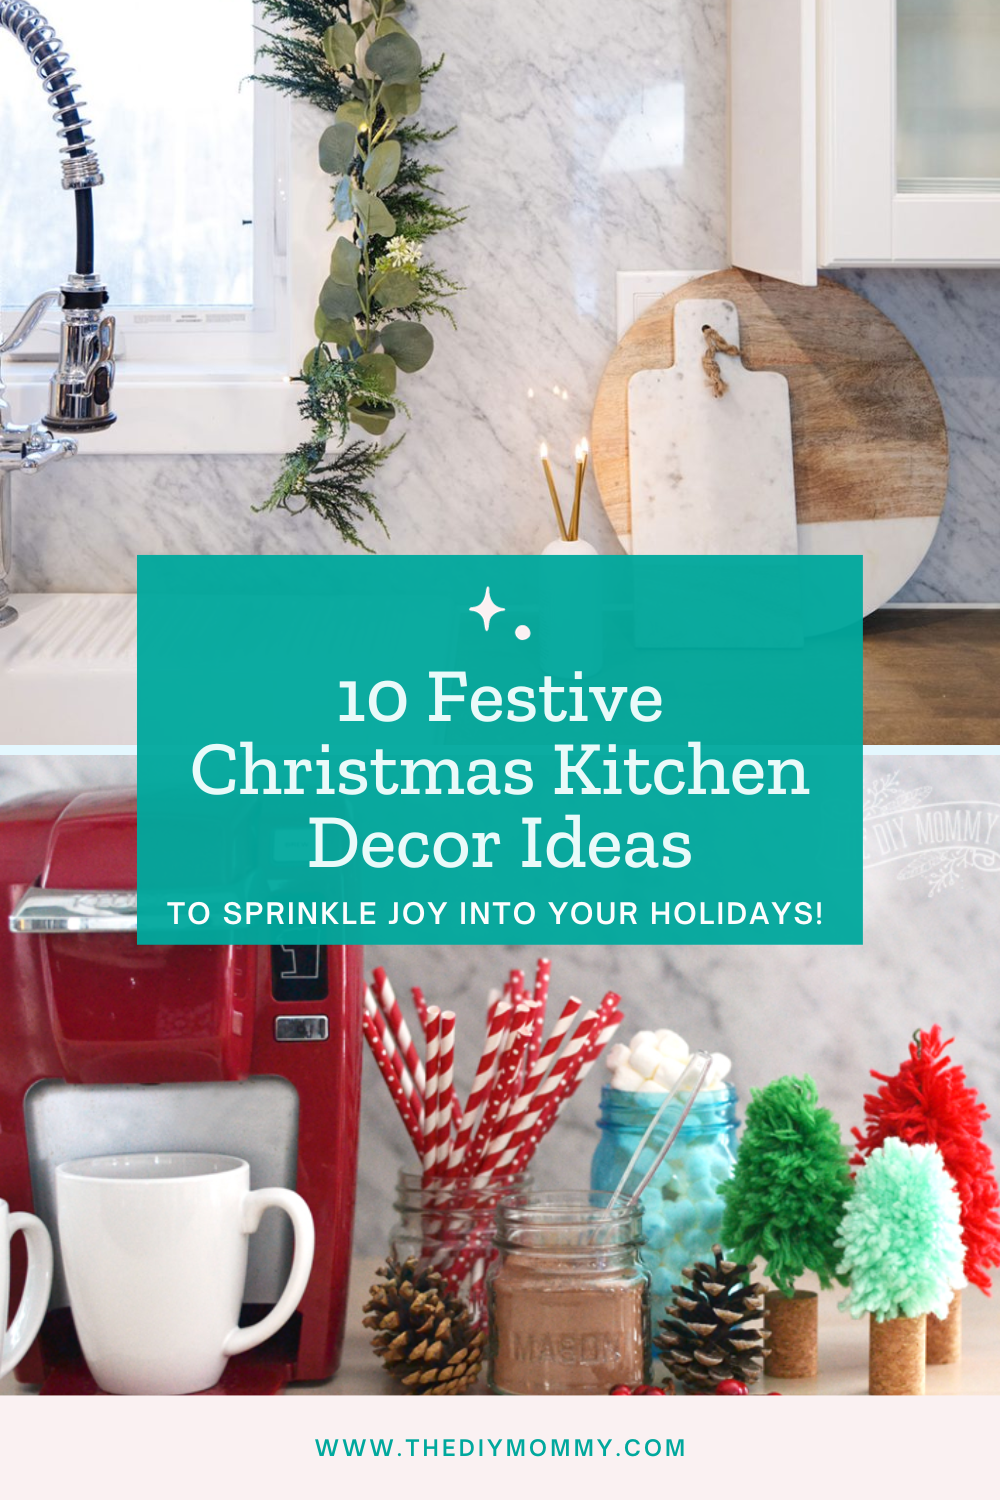 10 festive Christmas kitchen decor ideas.